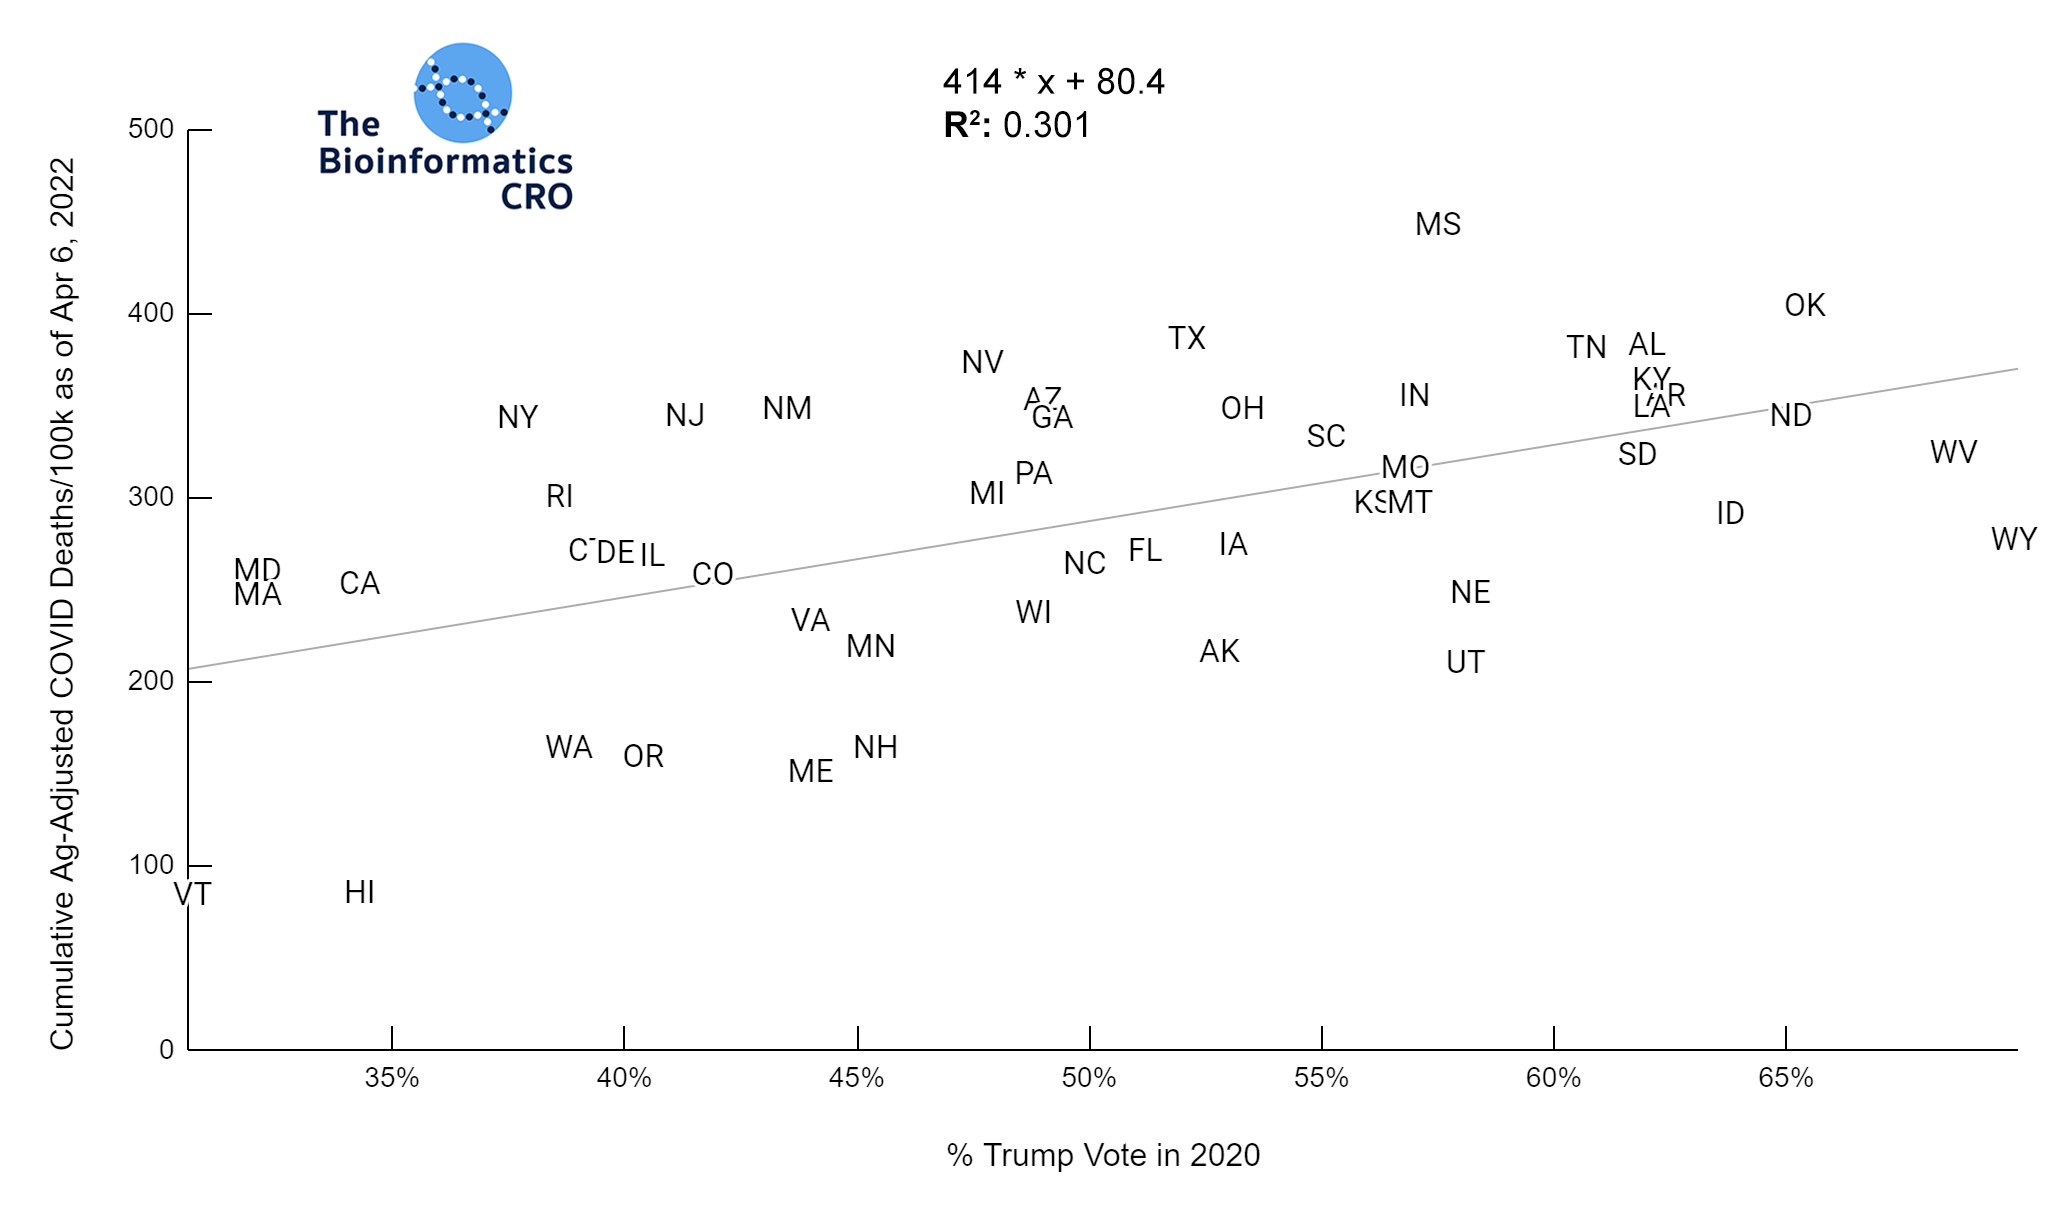 Age adjusted COVID Deaths versus Percent Trump Vote in 2020 | y = 414 * x + 80.4 | R^2 = 0.301